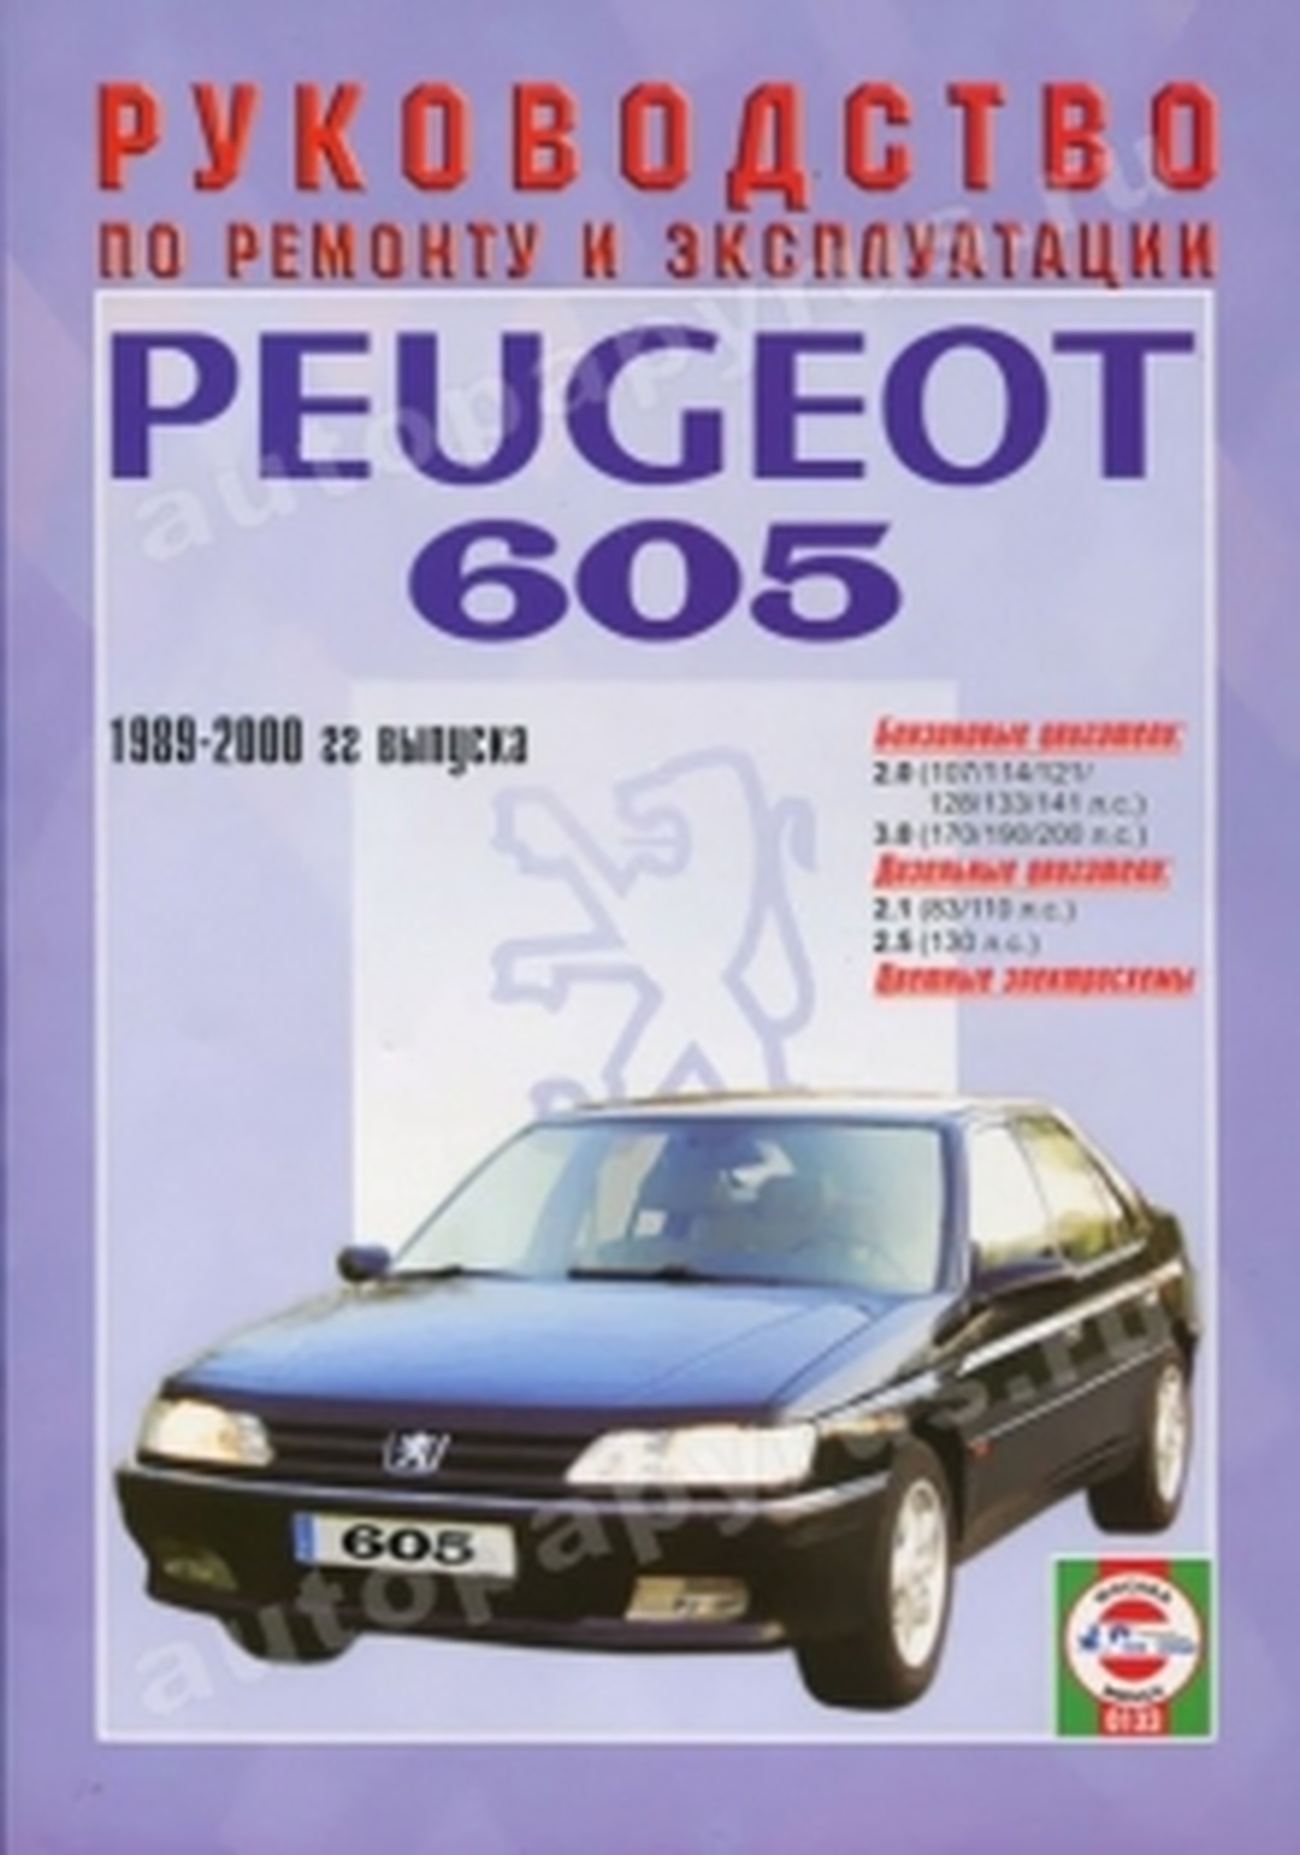 Книга: PEUGEOT 605 (б , д) 1989-2000 г.в., рем., экспл., то | Чижовка